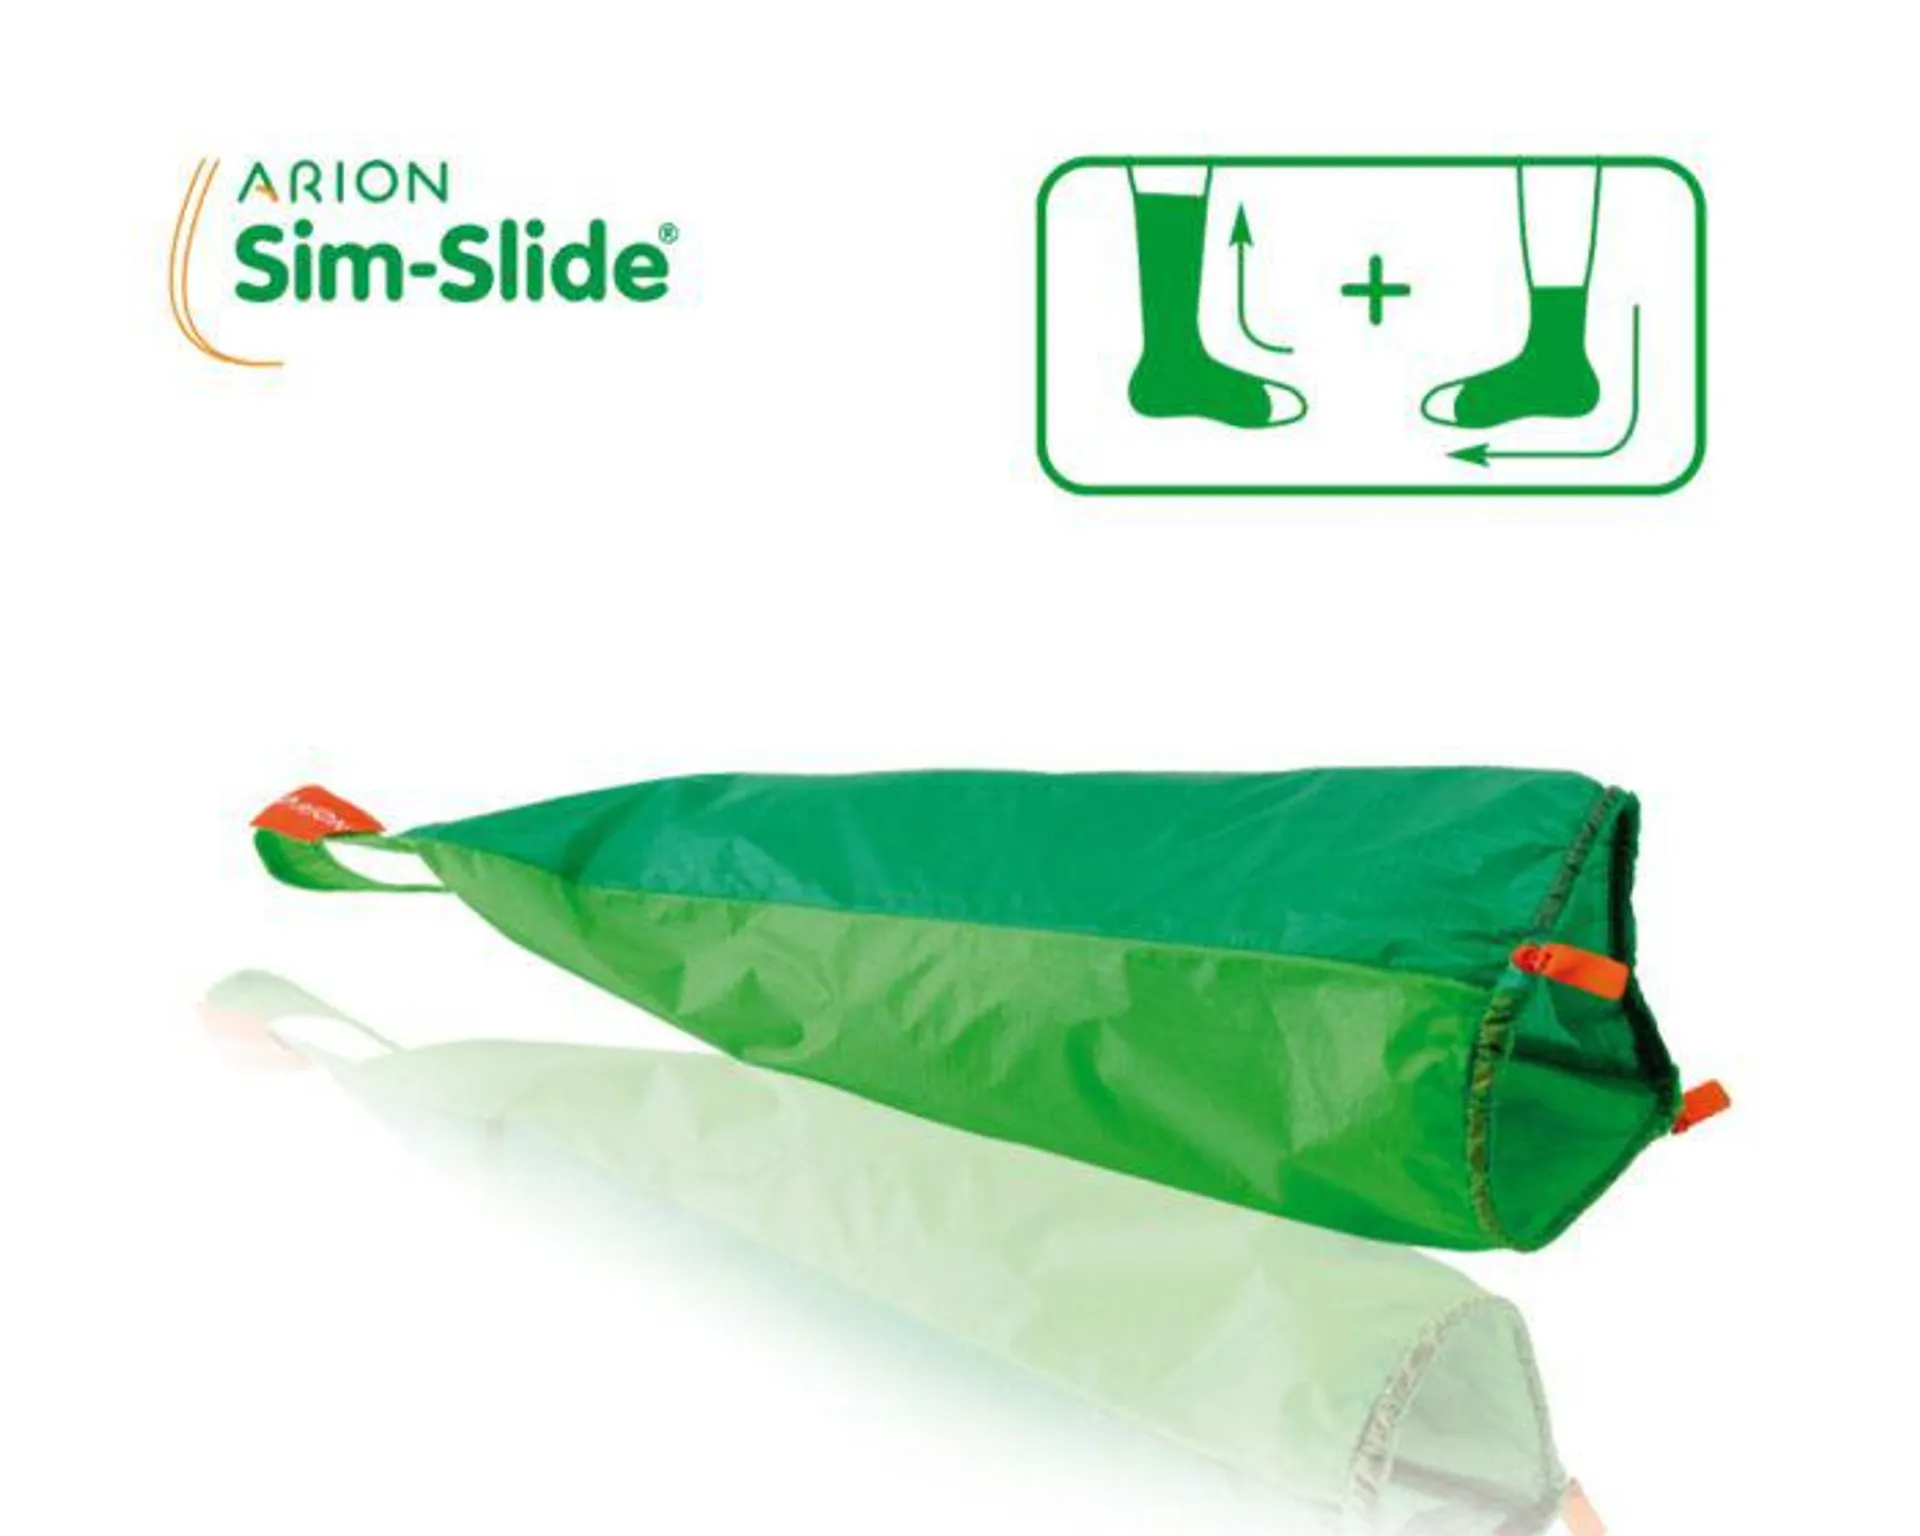 ARION Sim-Slide